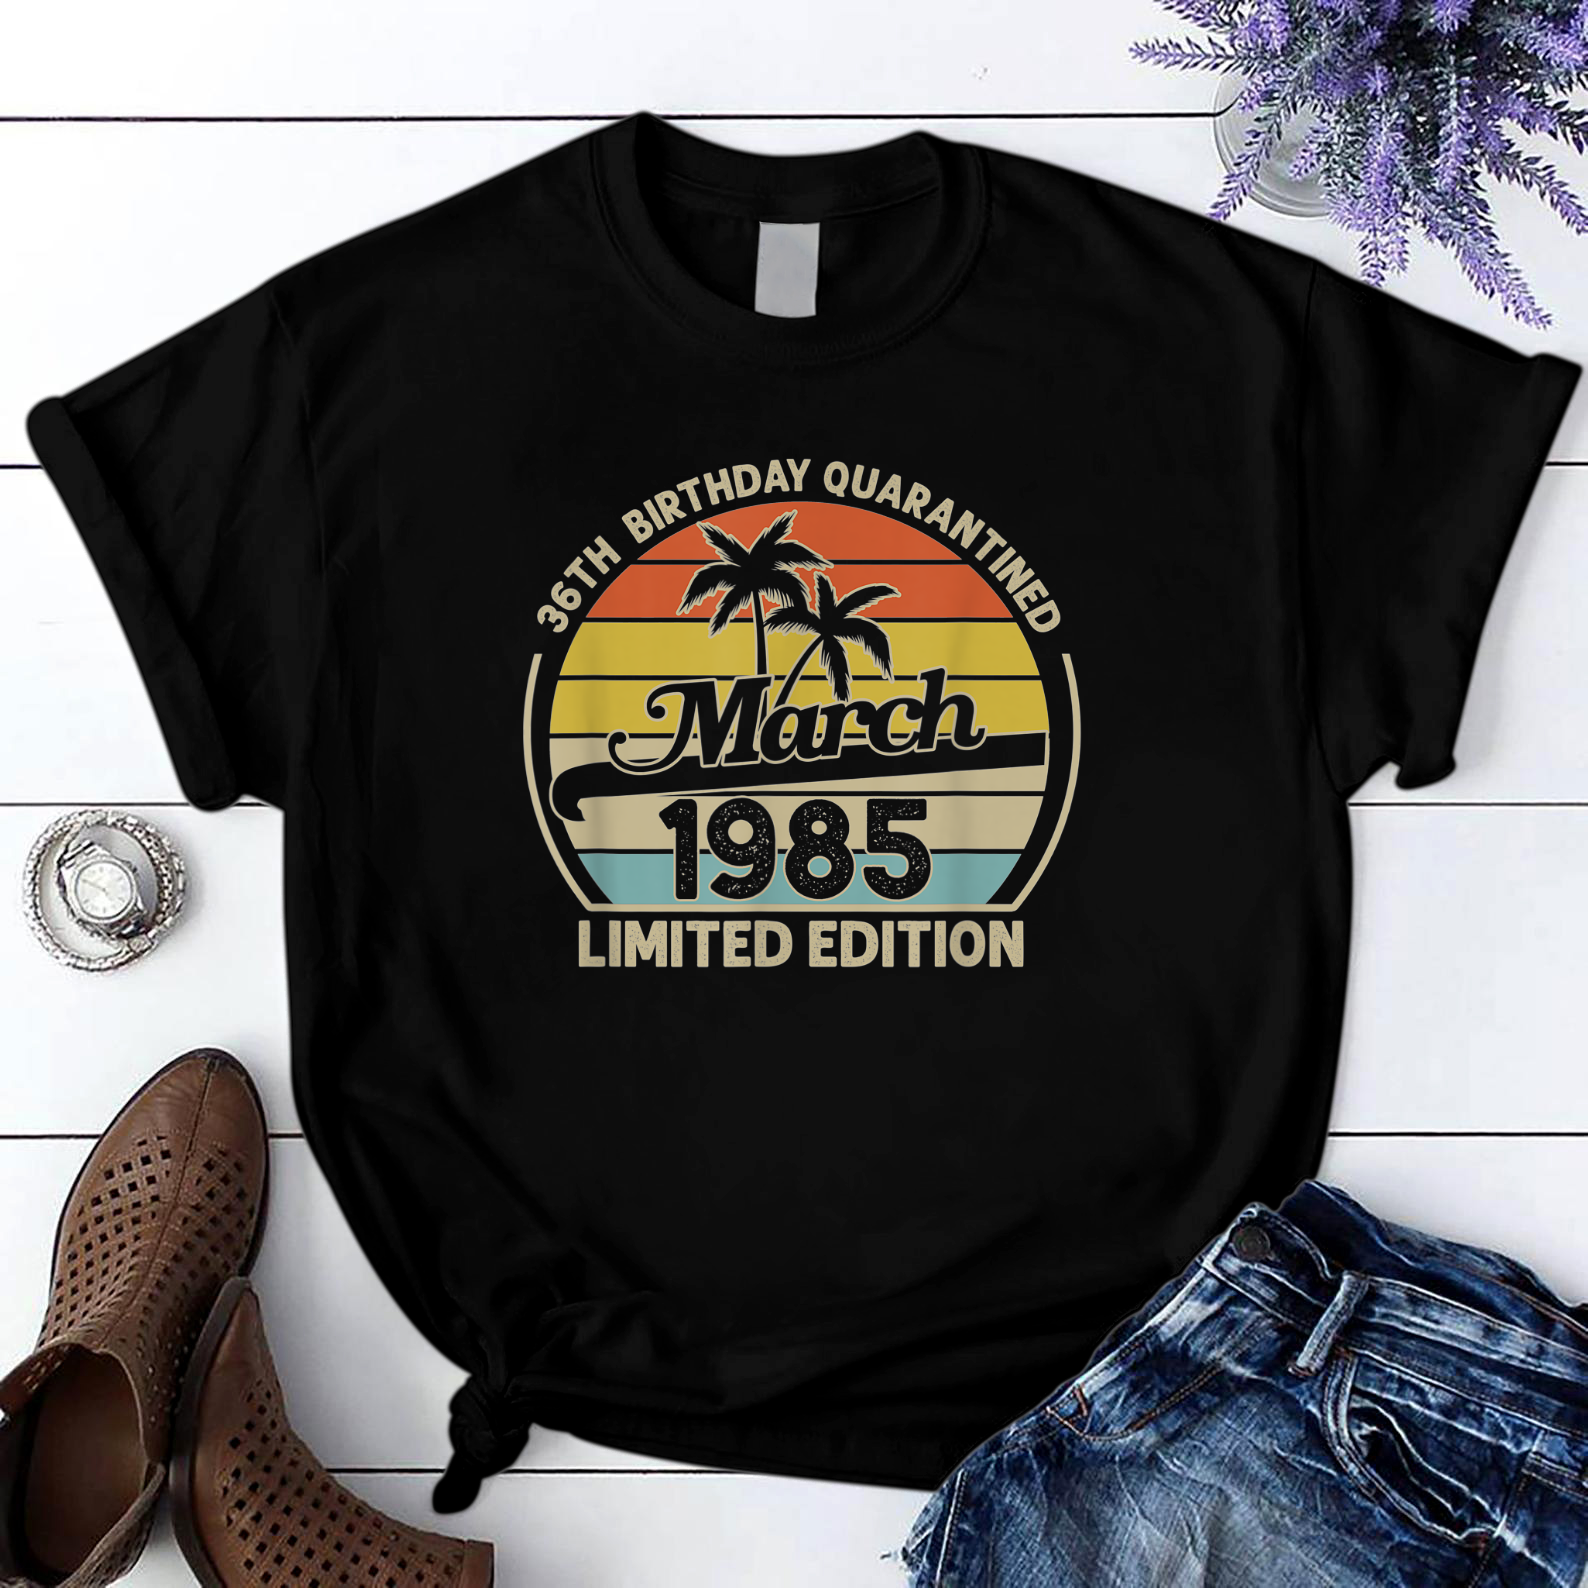 March 1985 Limited Edition 36Th Birthday Quarantined T Shirt Black Unisex S-6Xl